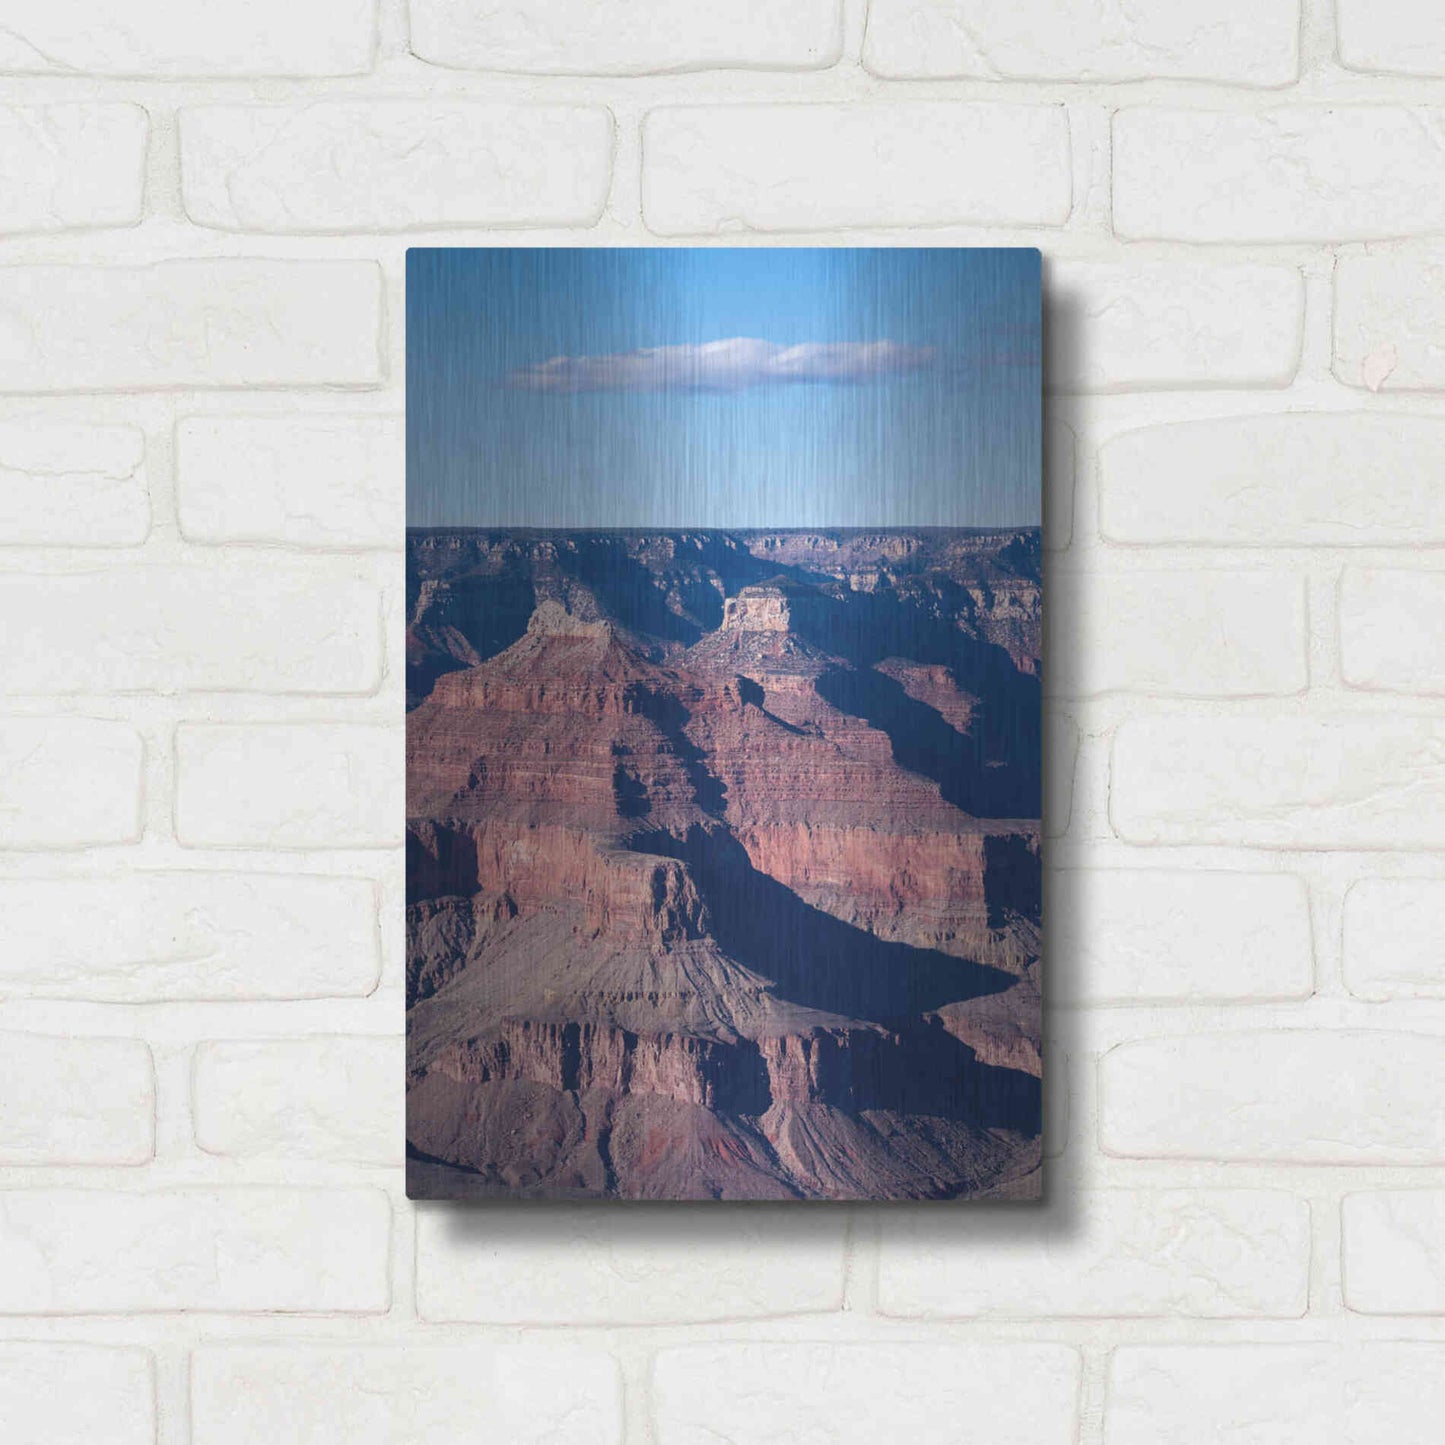 Luxe Metal Art ' Grand Canyon' by Robin Vandenabeele, Metal Wall Art,12x16